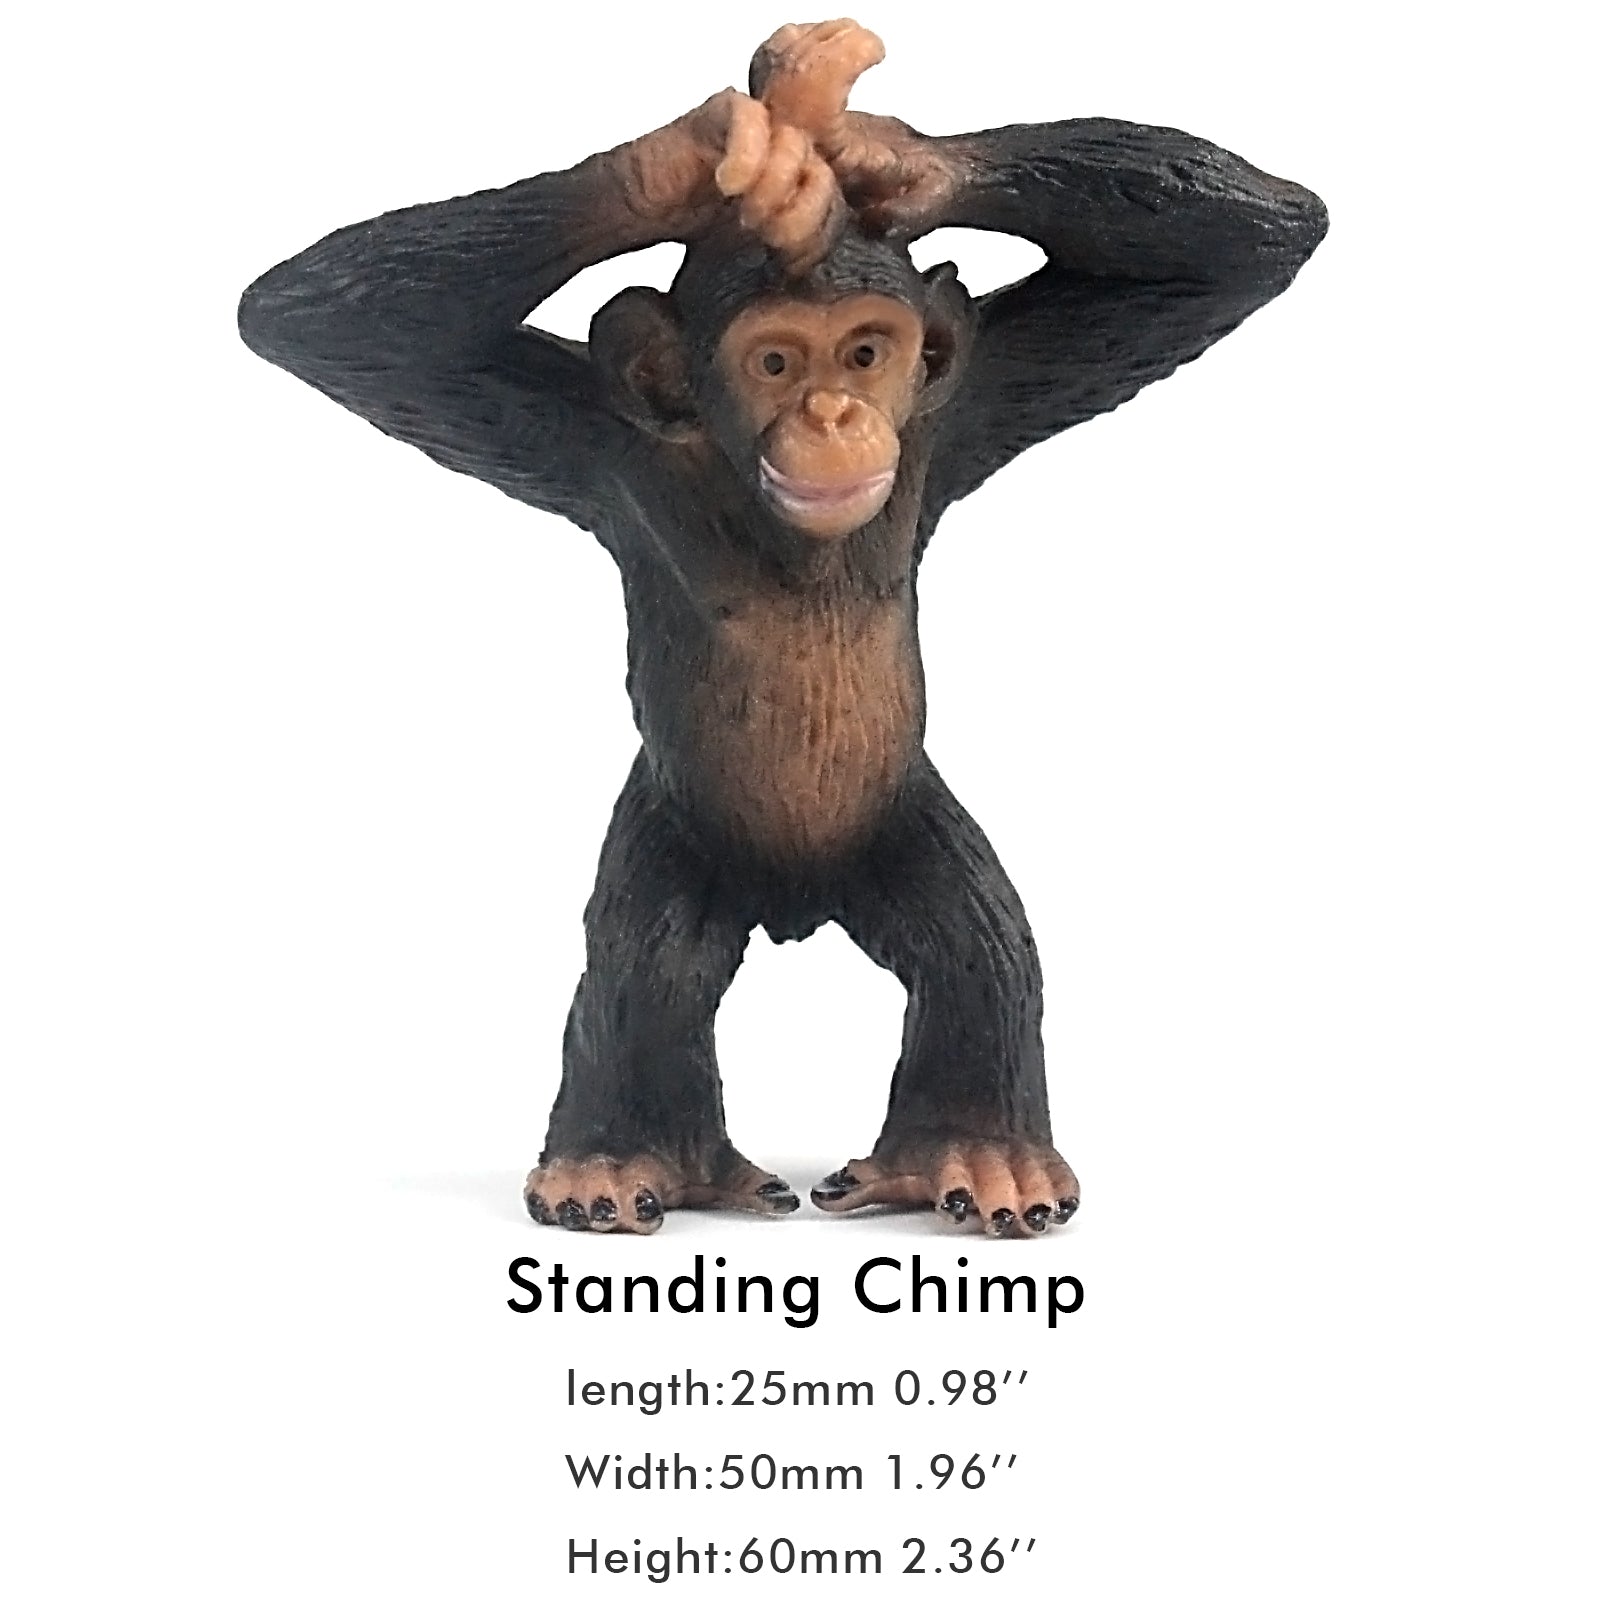 average chimpanzee height and weight